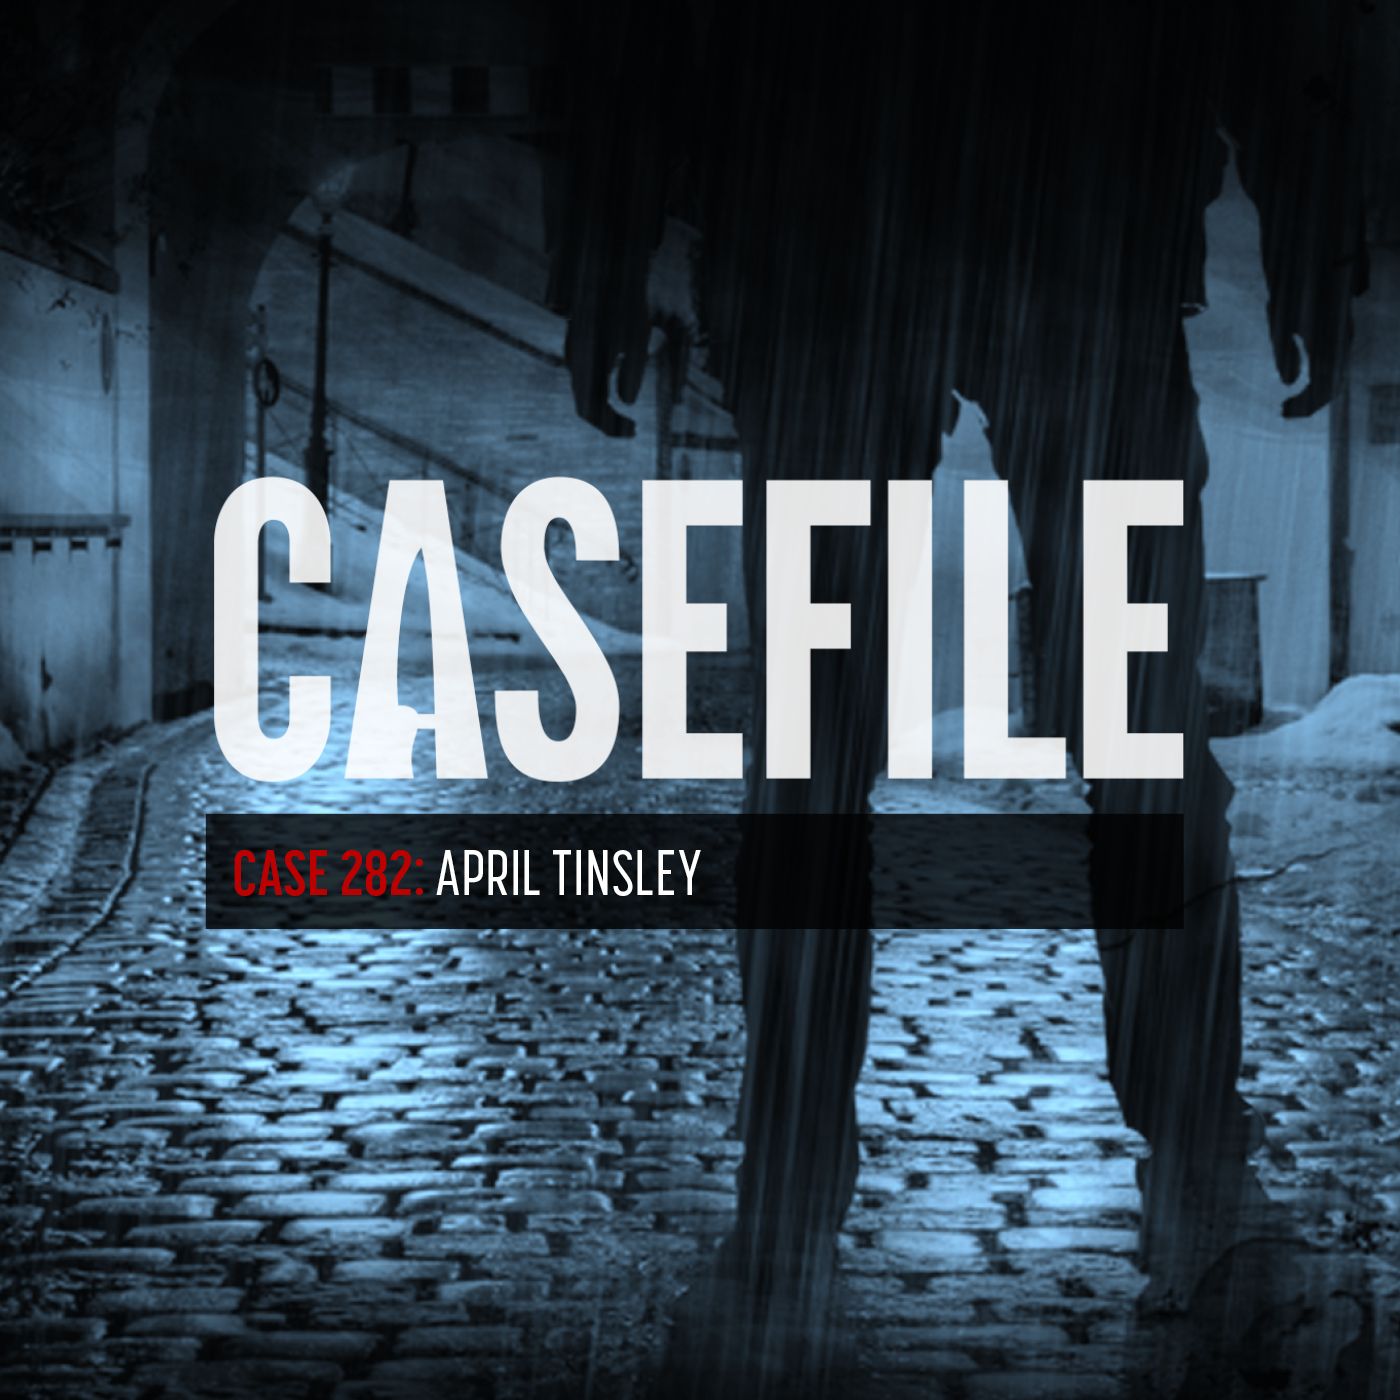 Case 282: April Tinsley